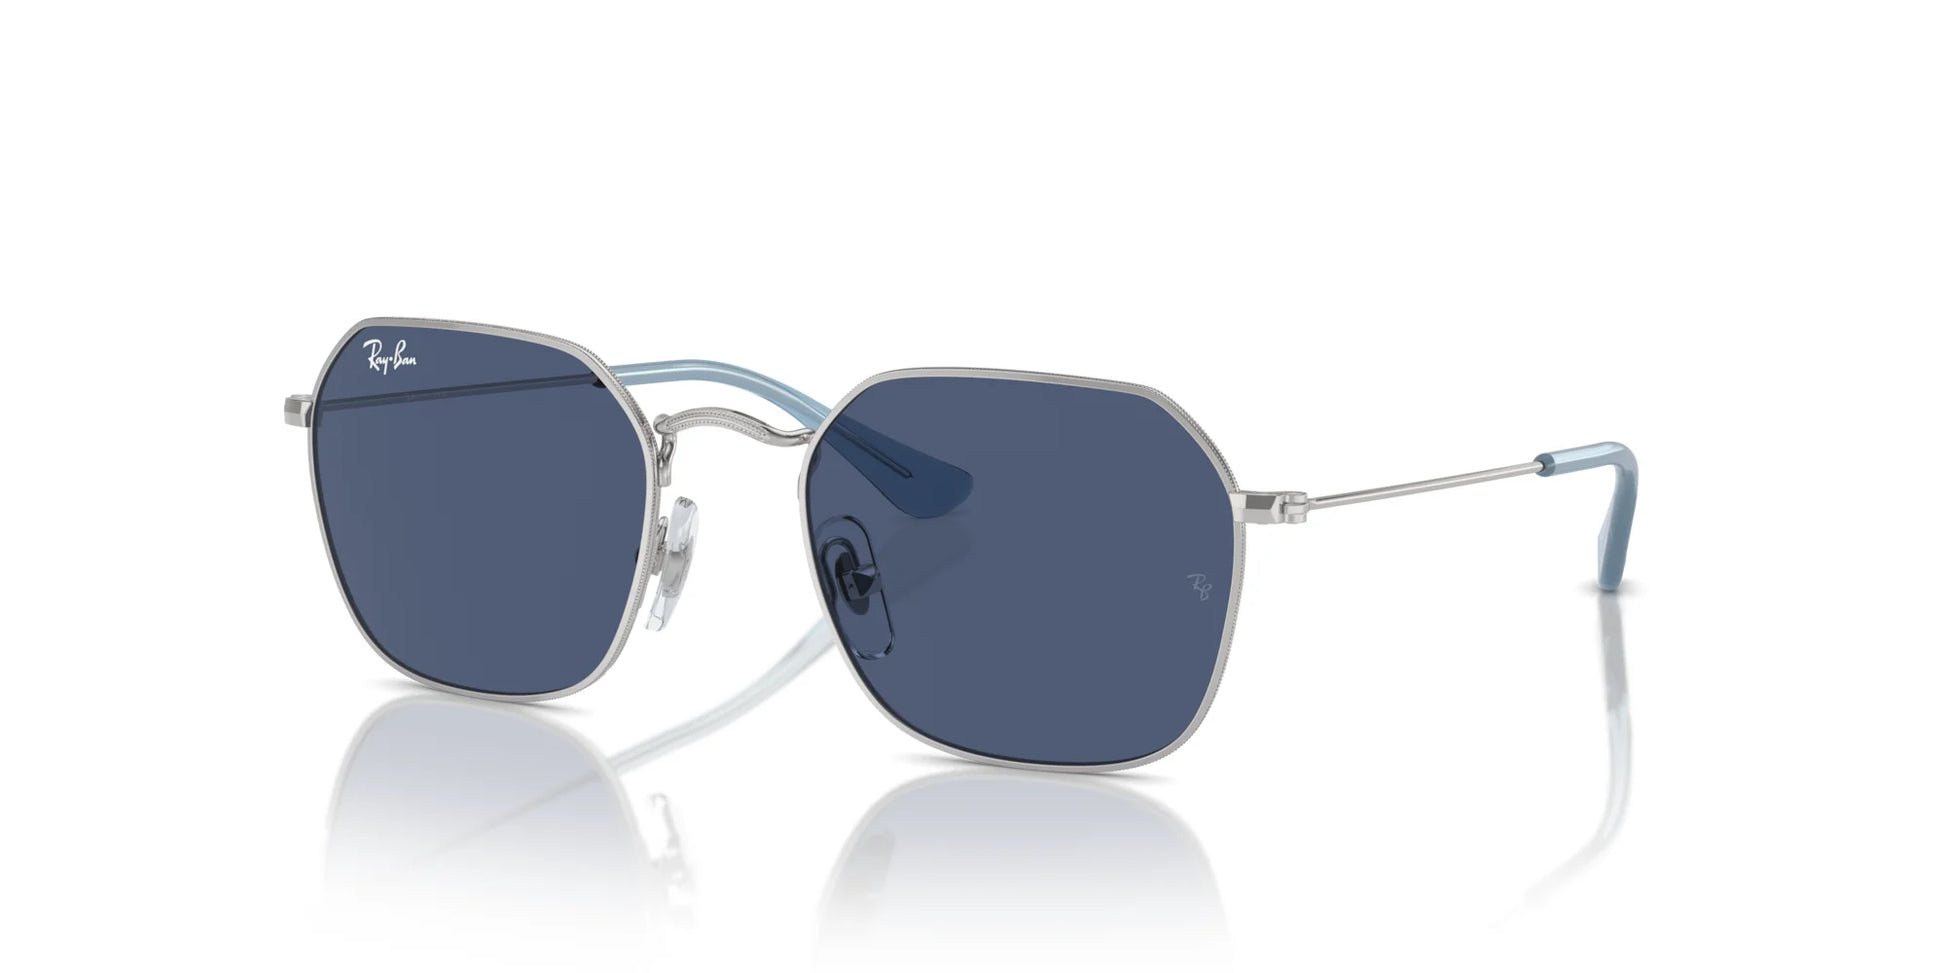 Ray-Ban RJ9594S Sunglasses Silver / Dark Blue